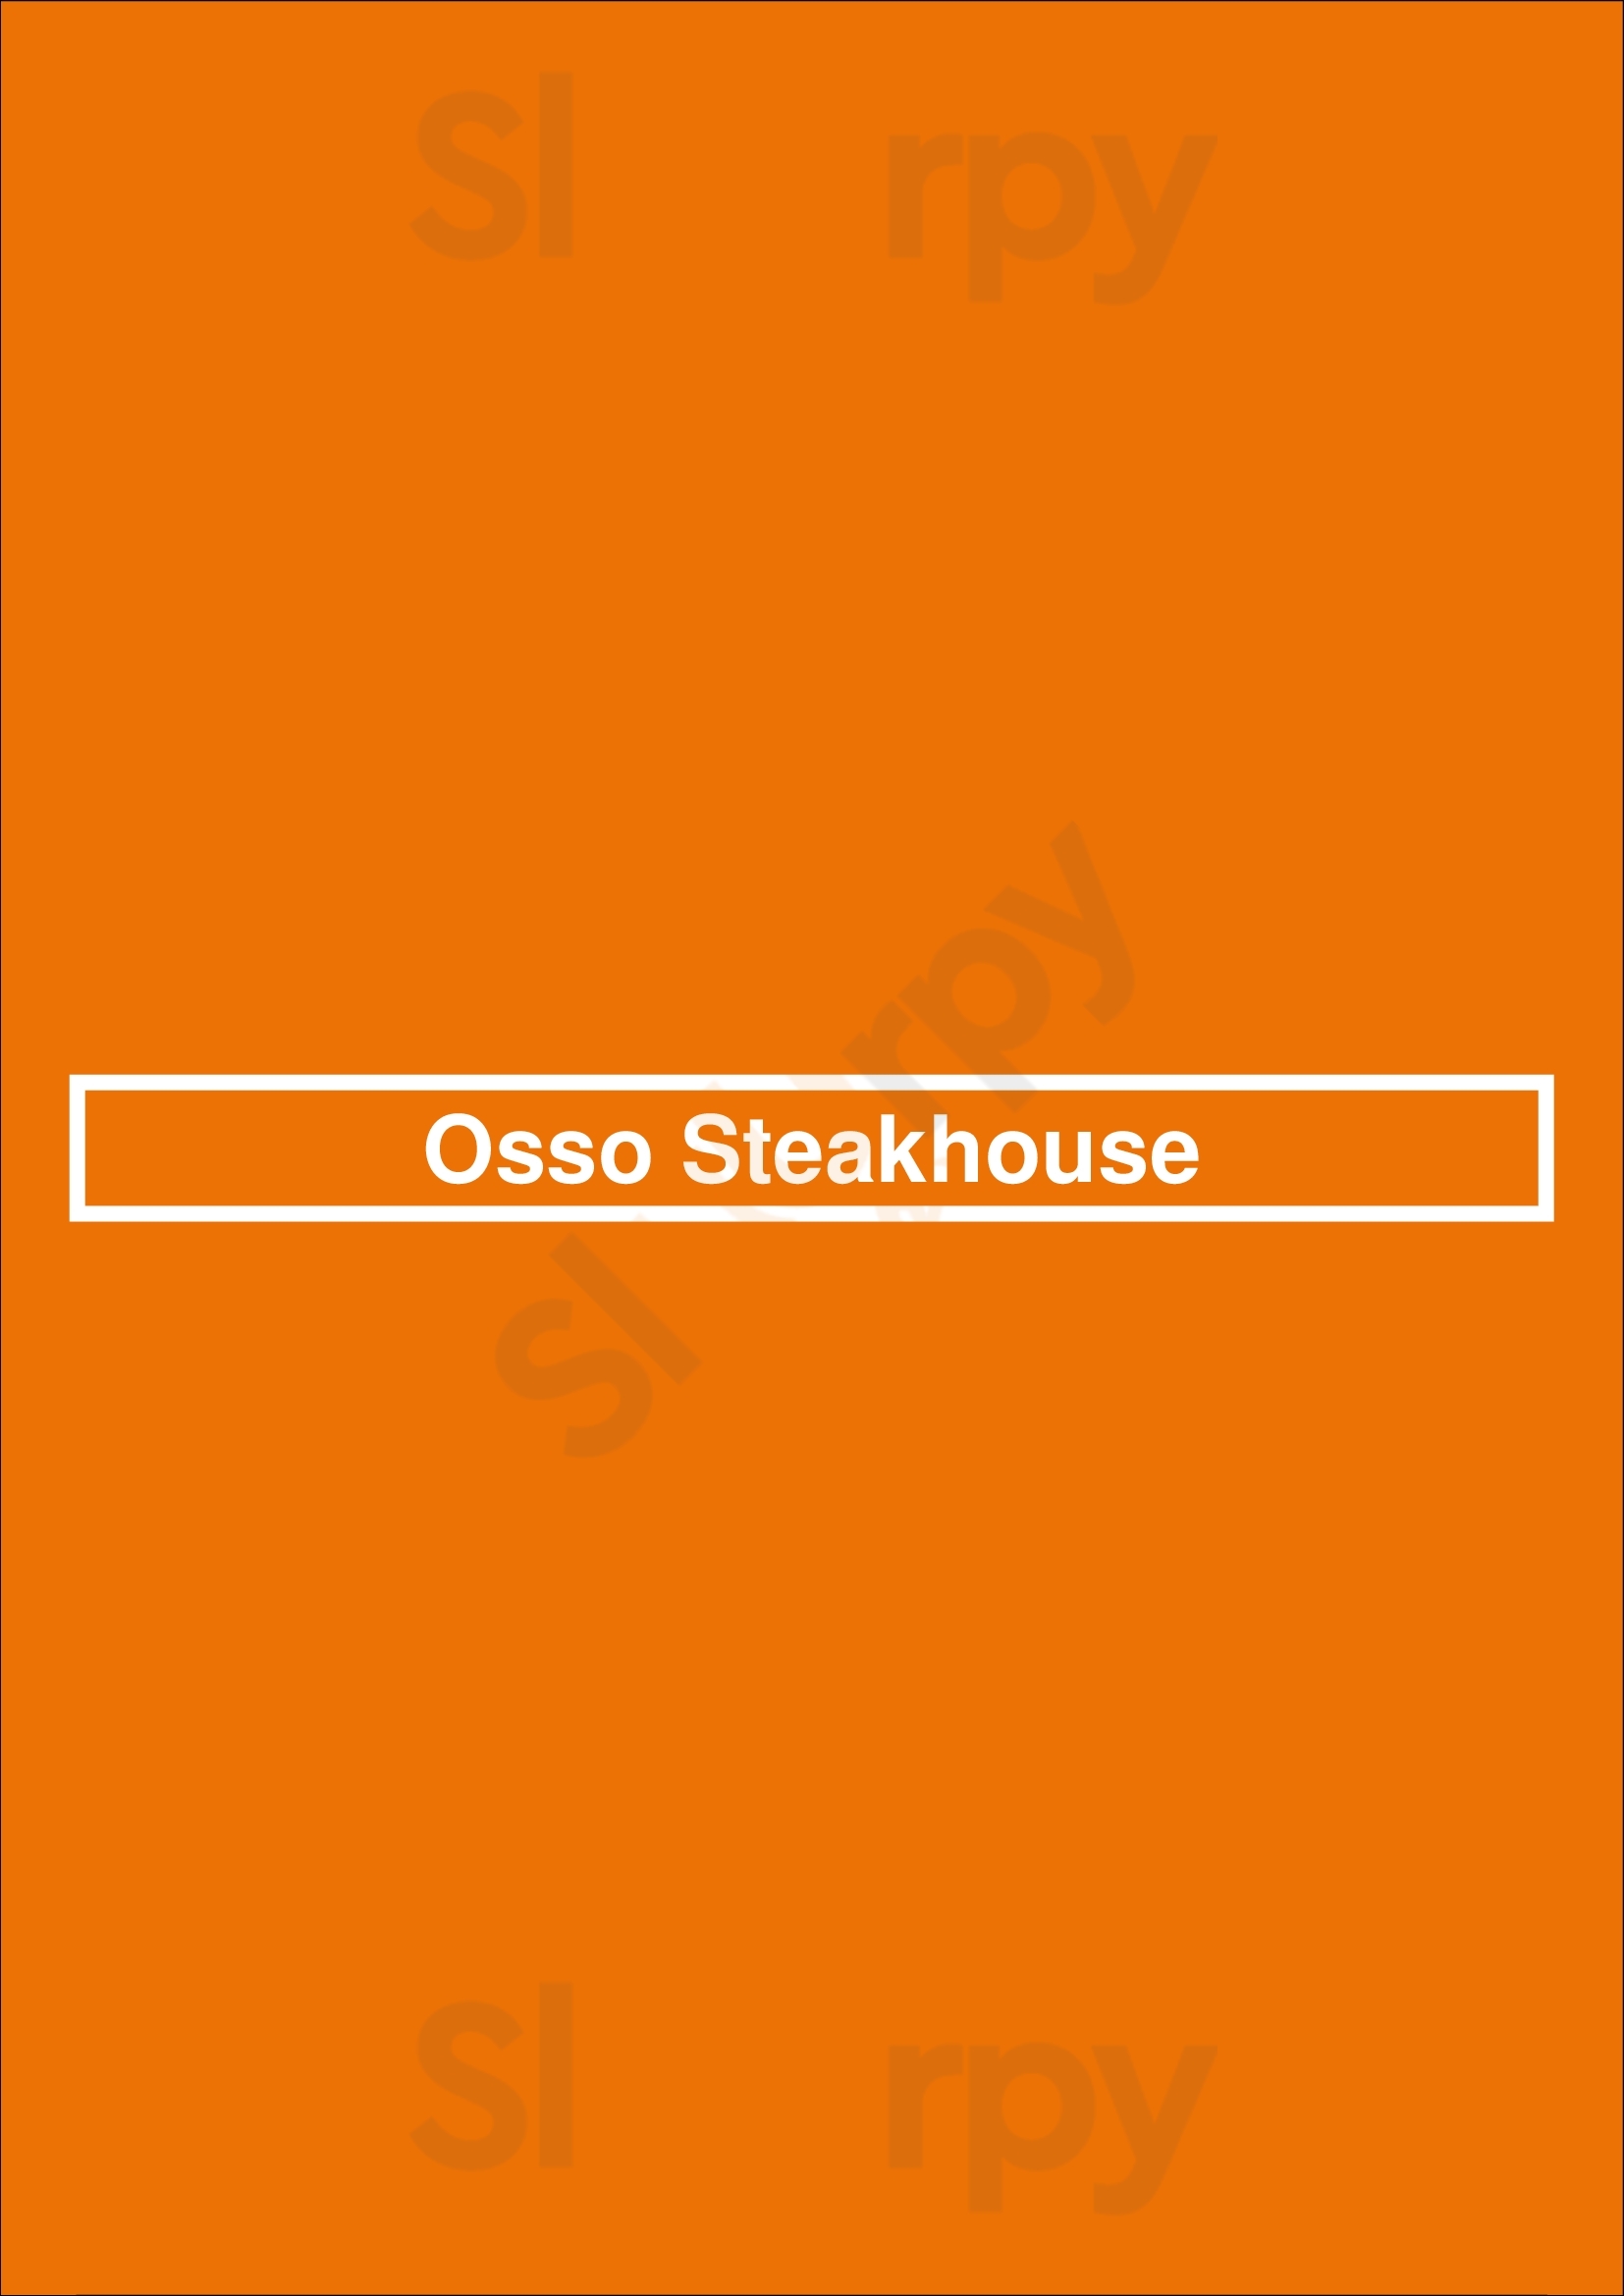 Osso Steakhouse San Francisco Menu - 1